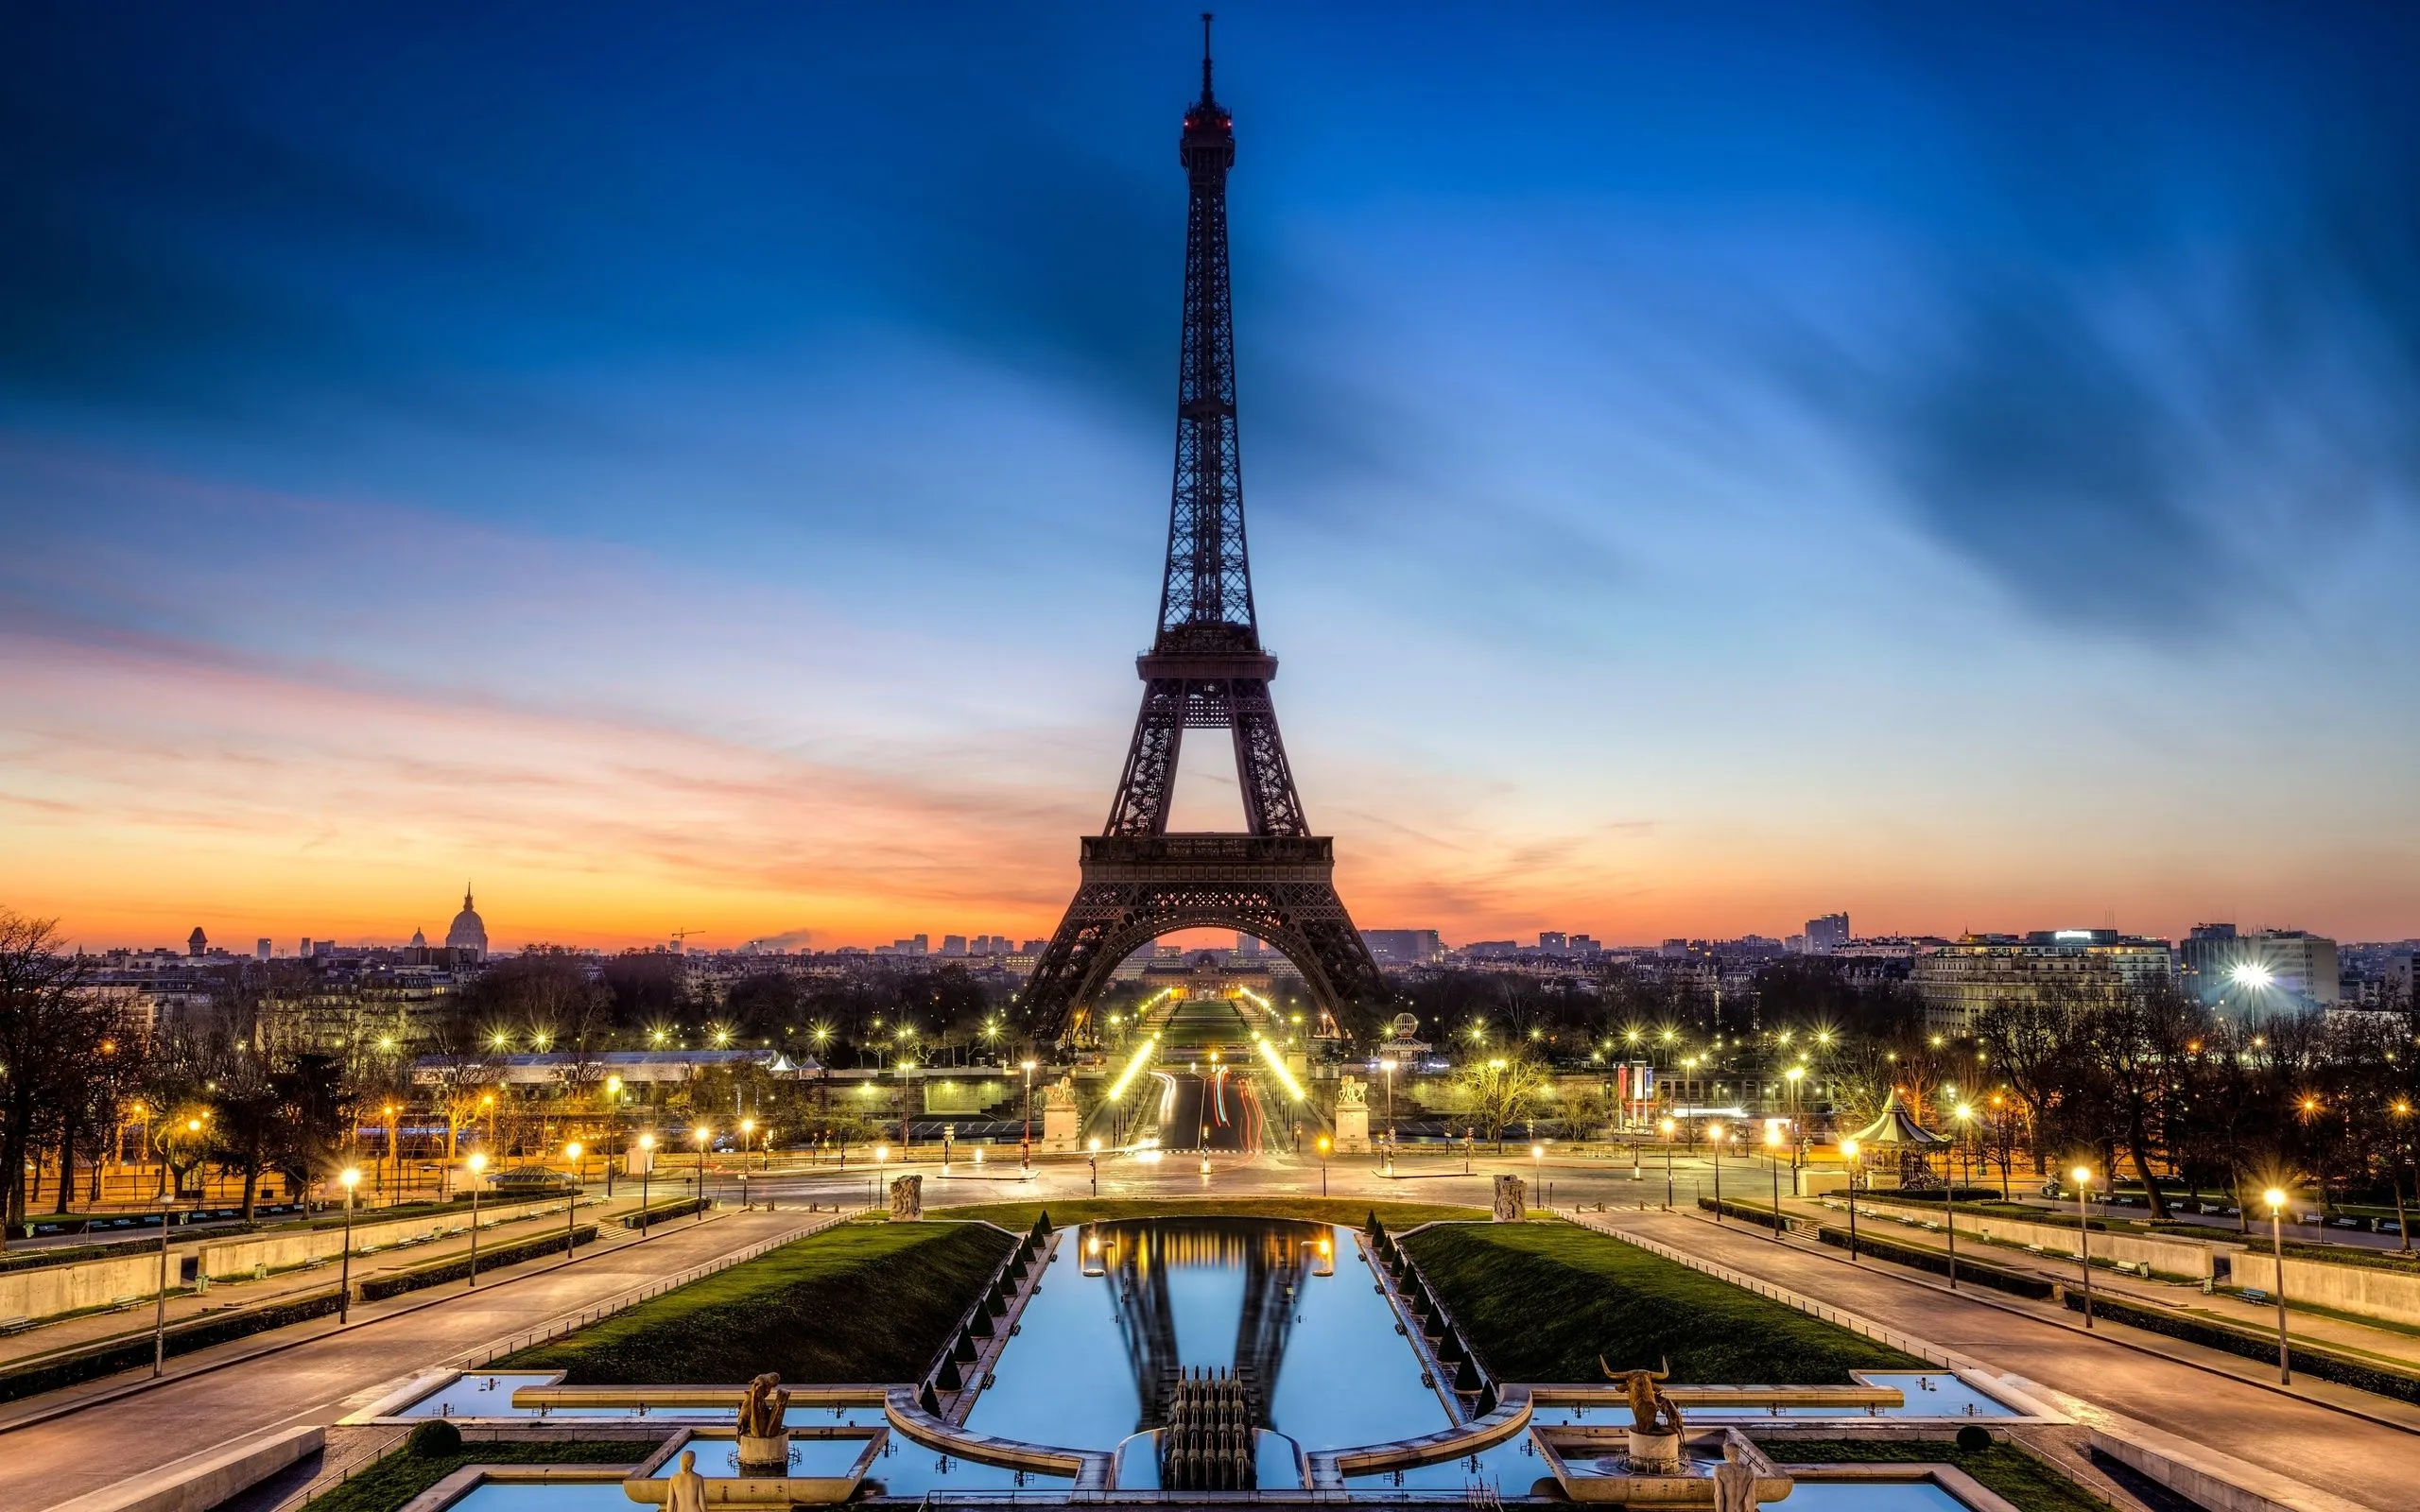 168 Eiffel Tower Wallpapers | Eiffel Tower Backgrounds